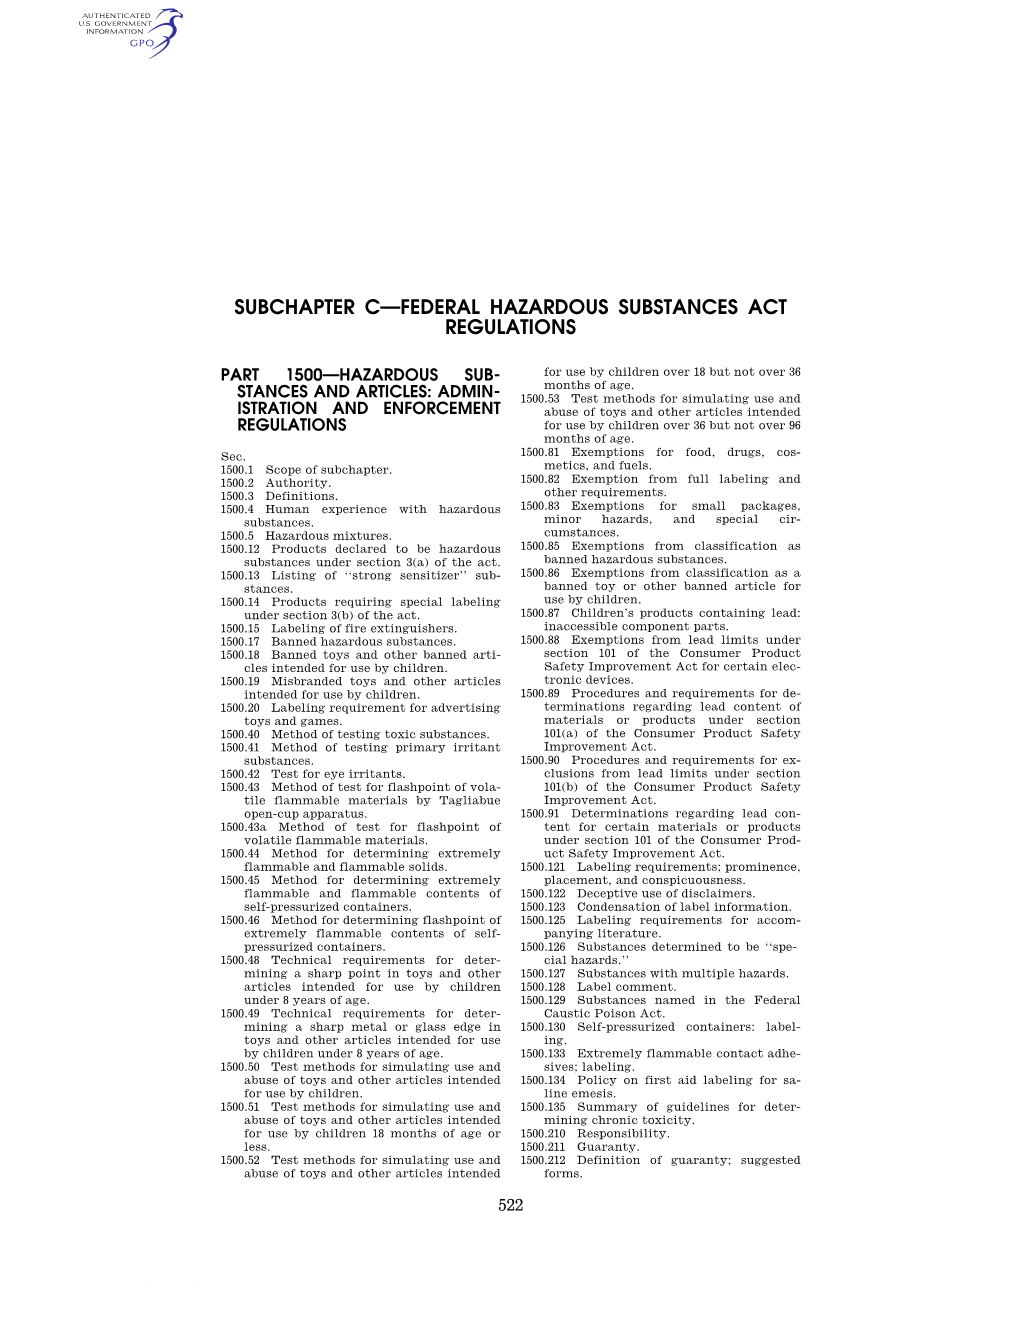 Subchapter C—Federal Hazardous Substances Act Regulations